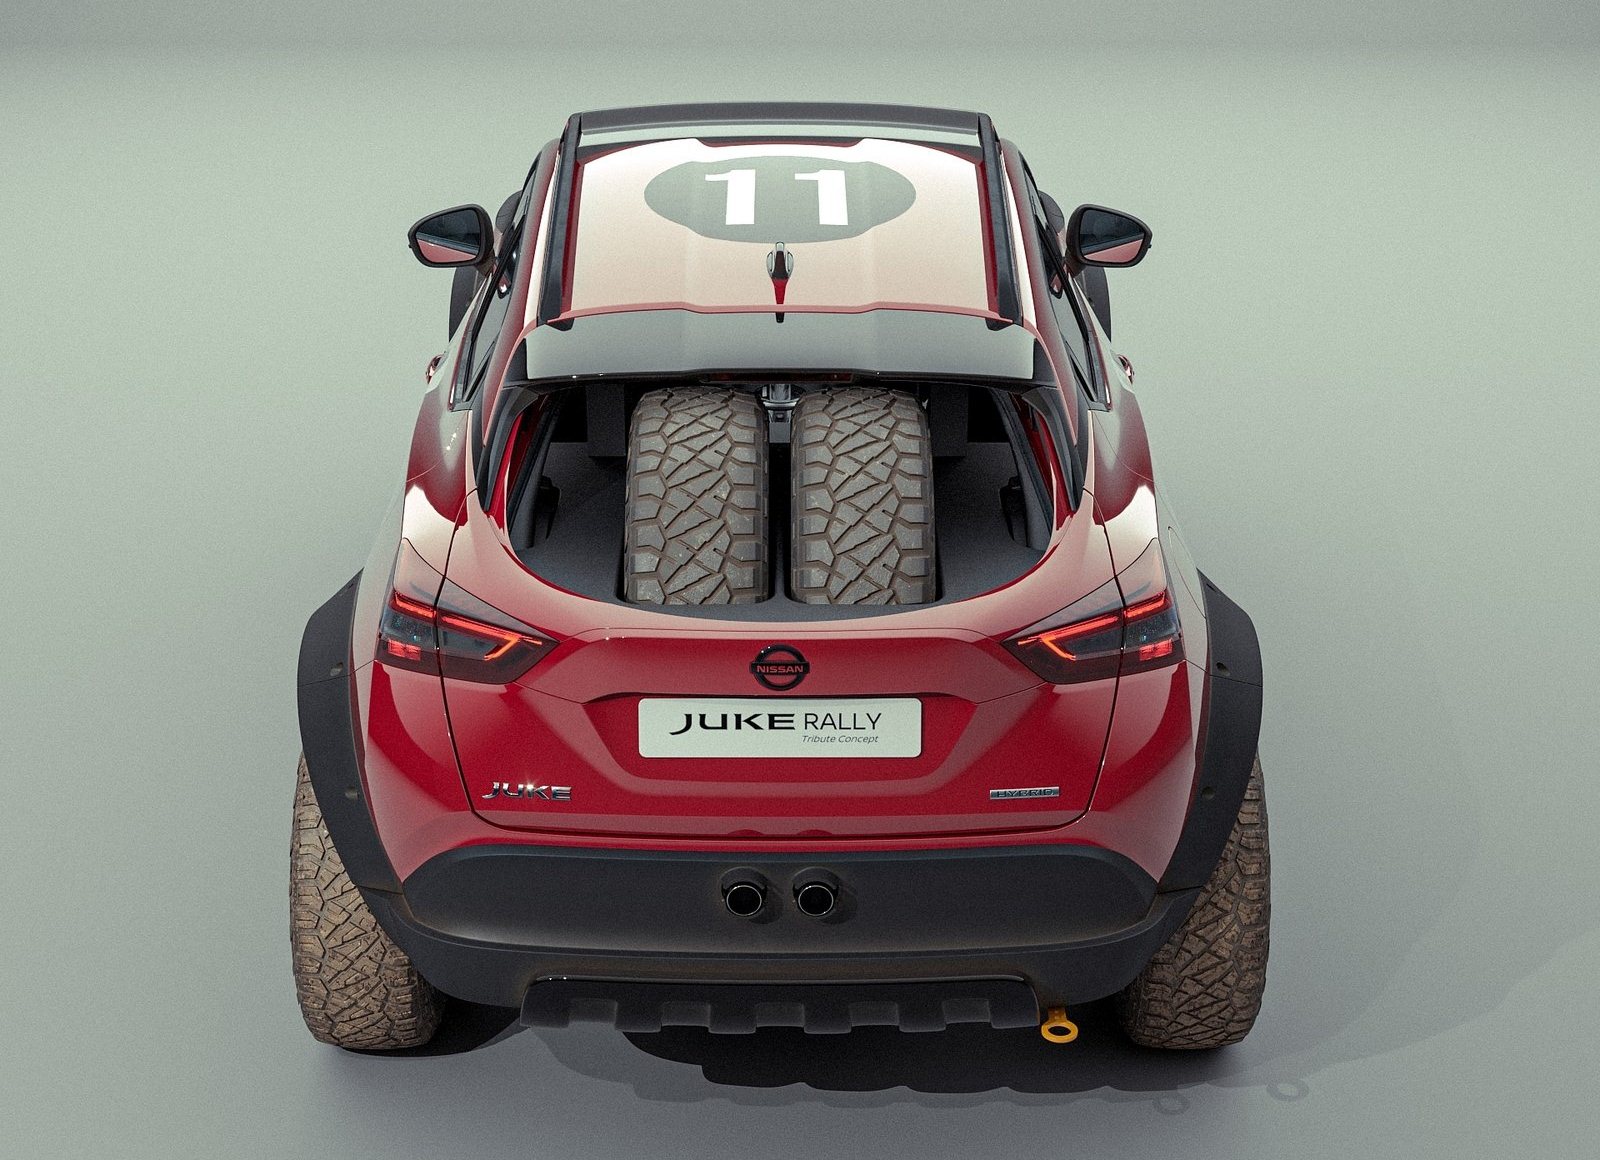 2021 Nissan Juke Rally Tribute Concept